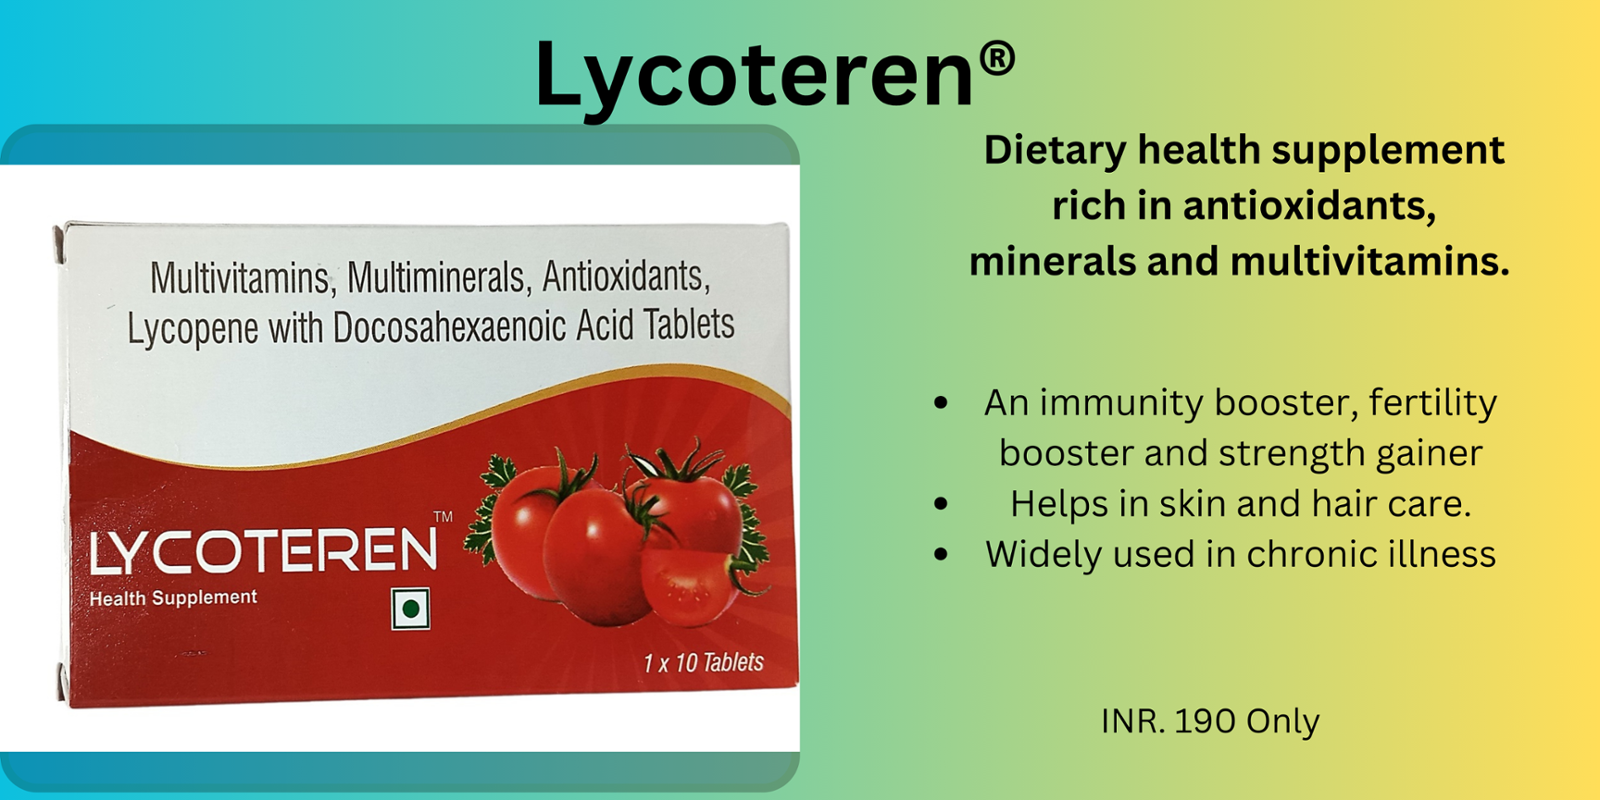 Lycoteren antioxidant and multivitamin